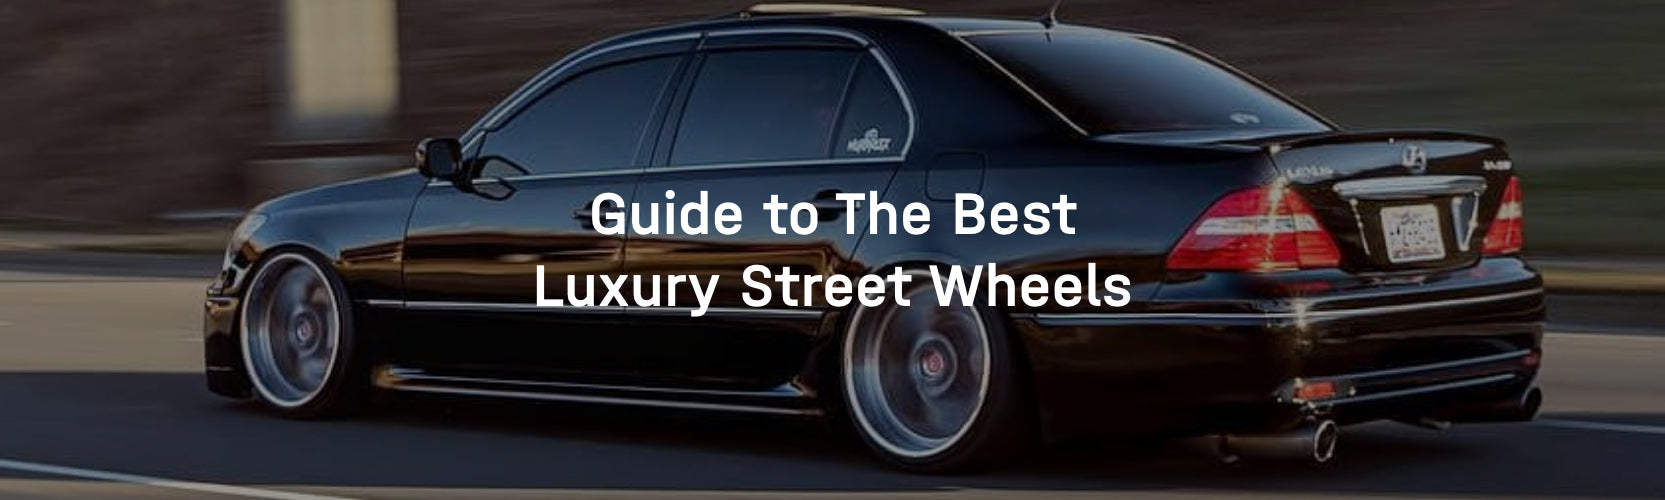 Guide to The Best Luxury Street Wheels